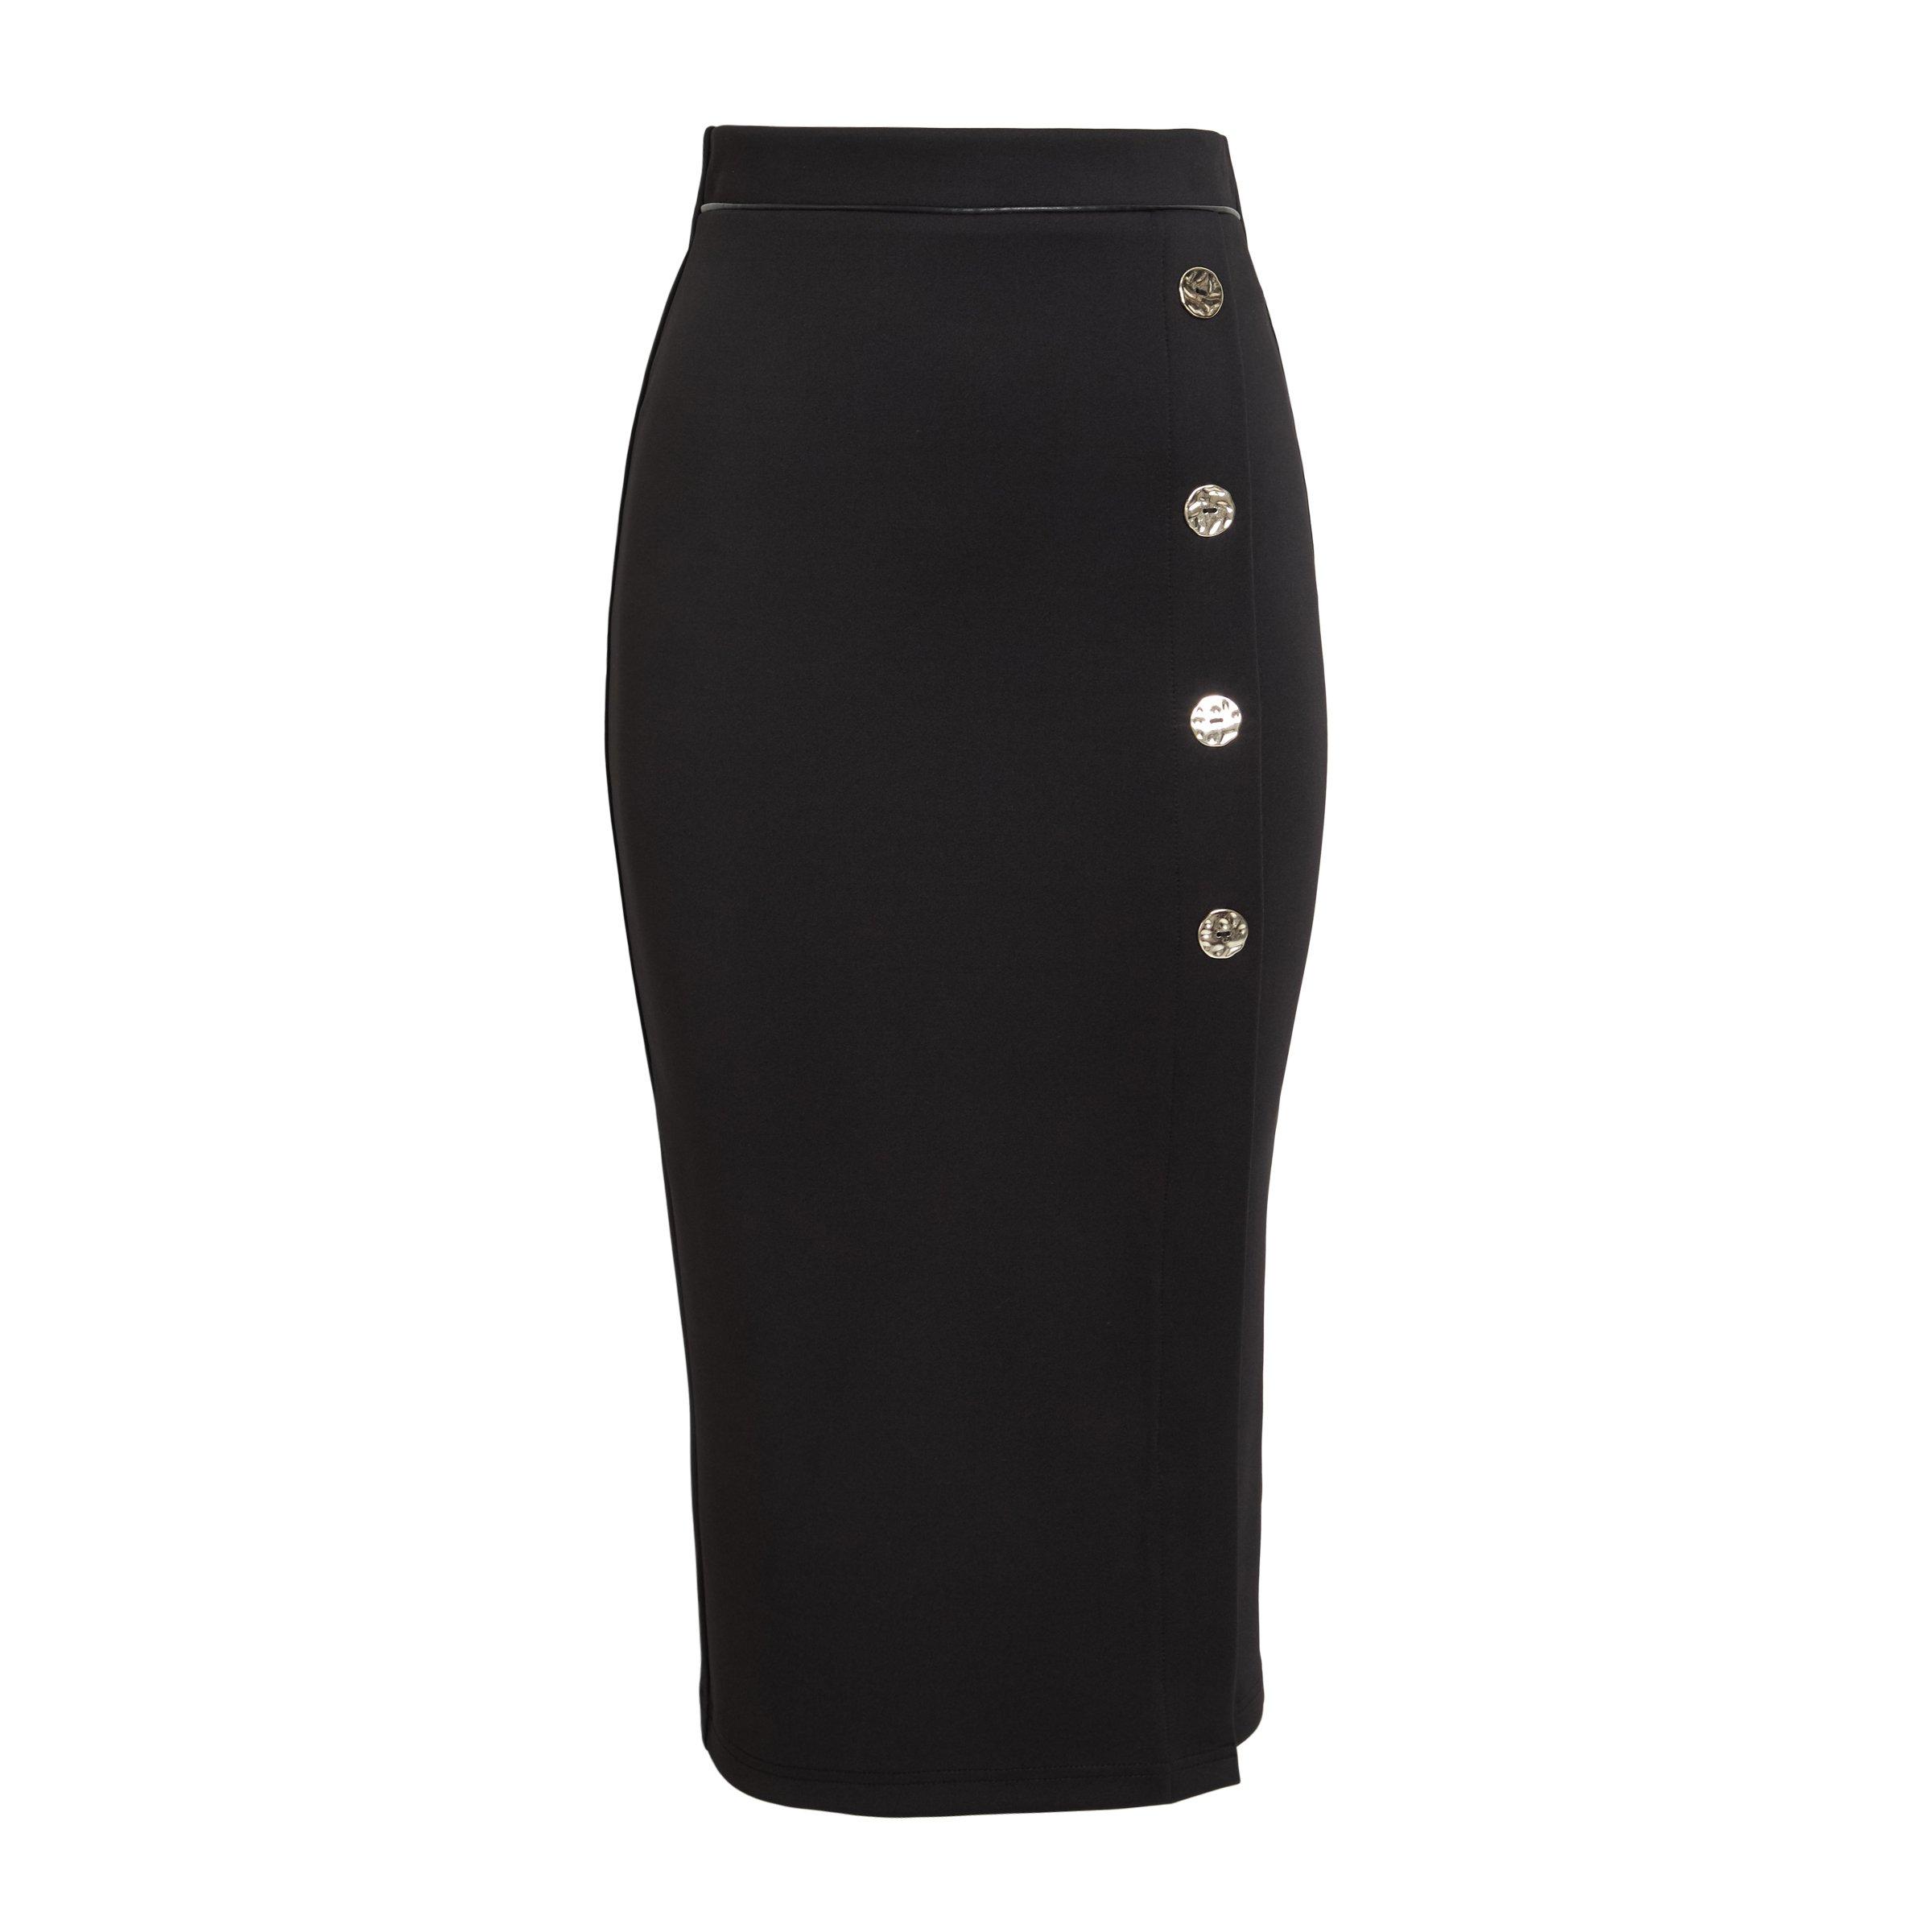 Buy Truworths Black Bodycon Skirt Online | Truworths